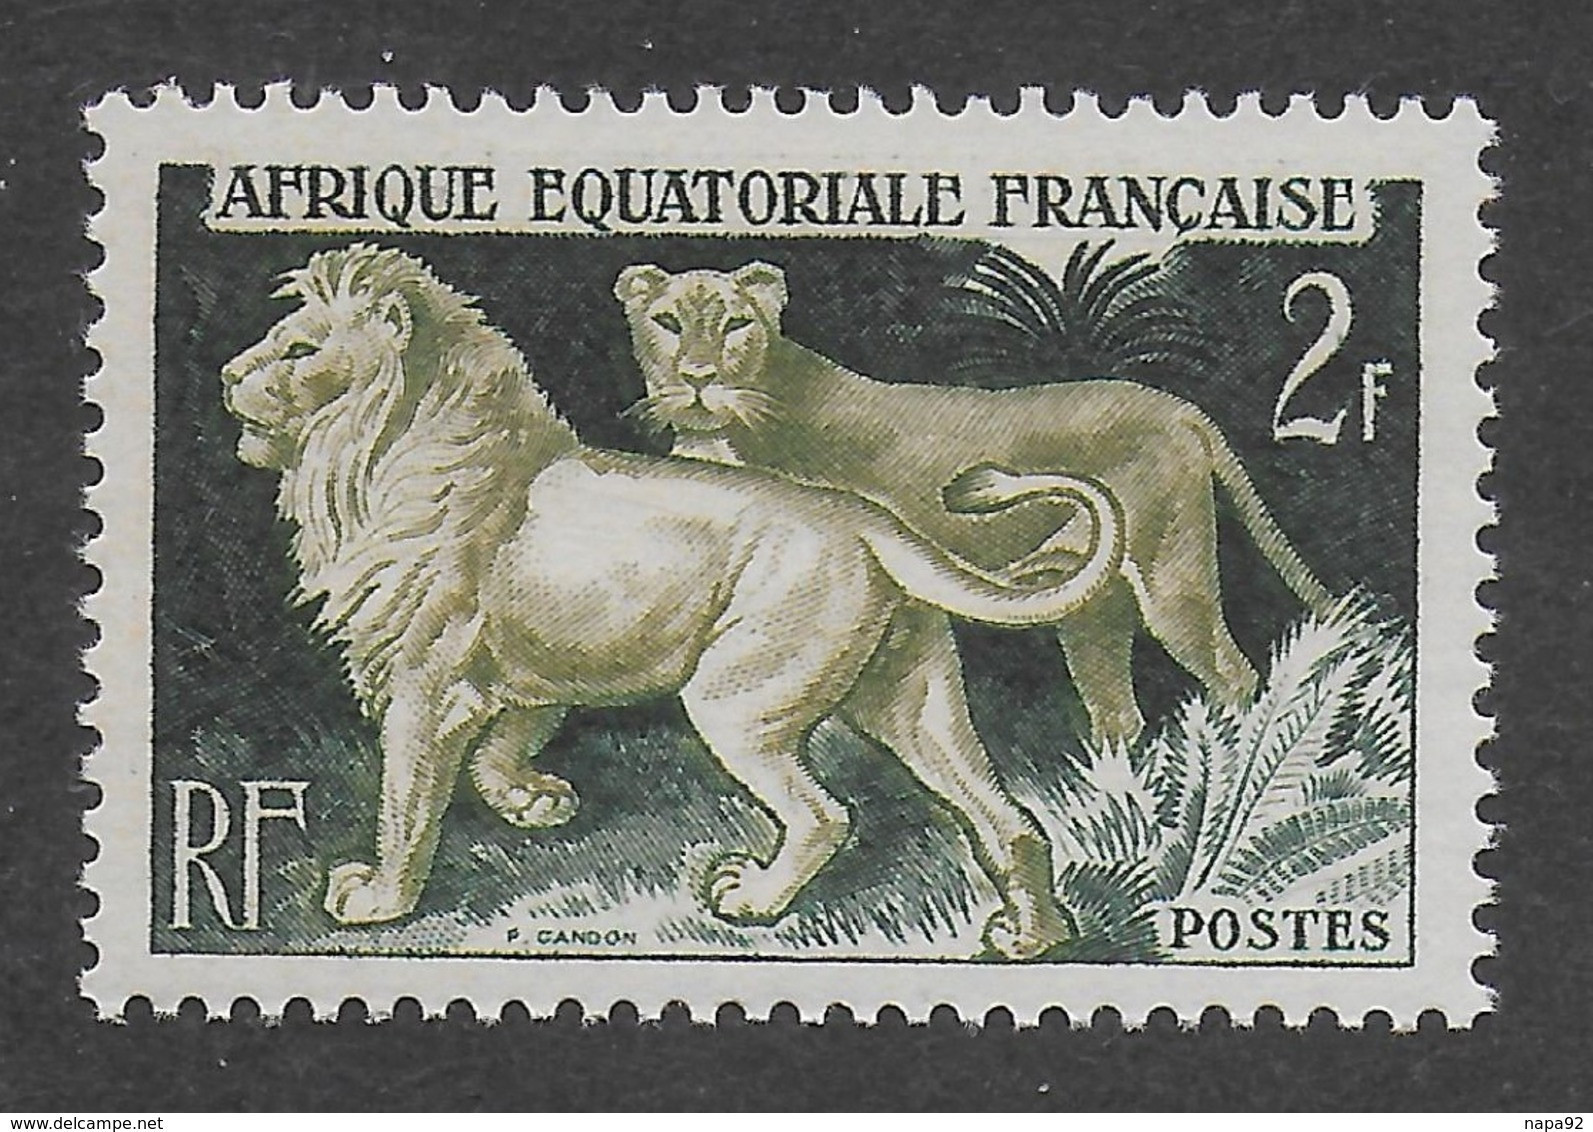 AFRIQUE EQUATORIALE FRANCAISE - AEF - A.E.F. - 1957 - YT 239** - MNH - Unused Stamps